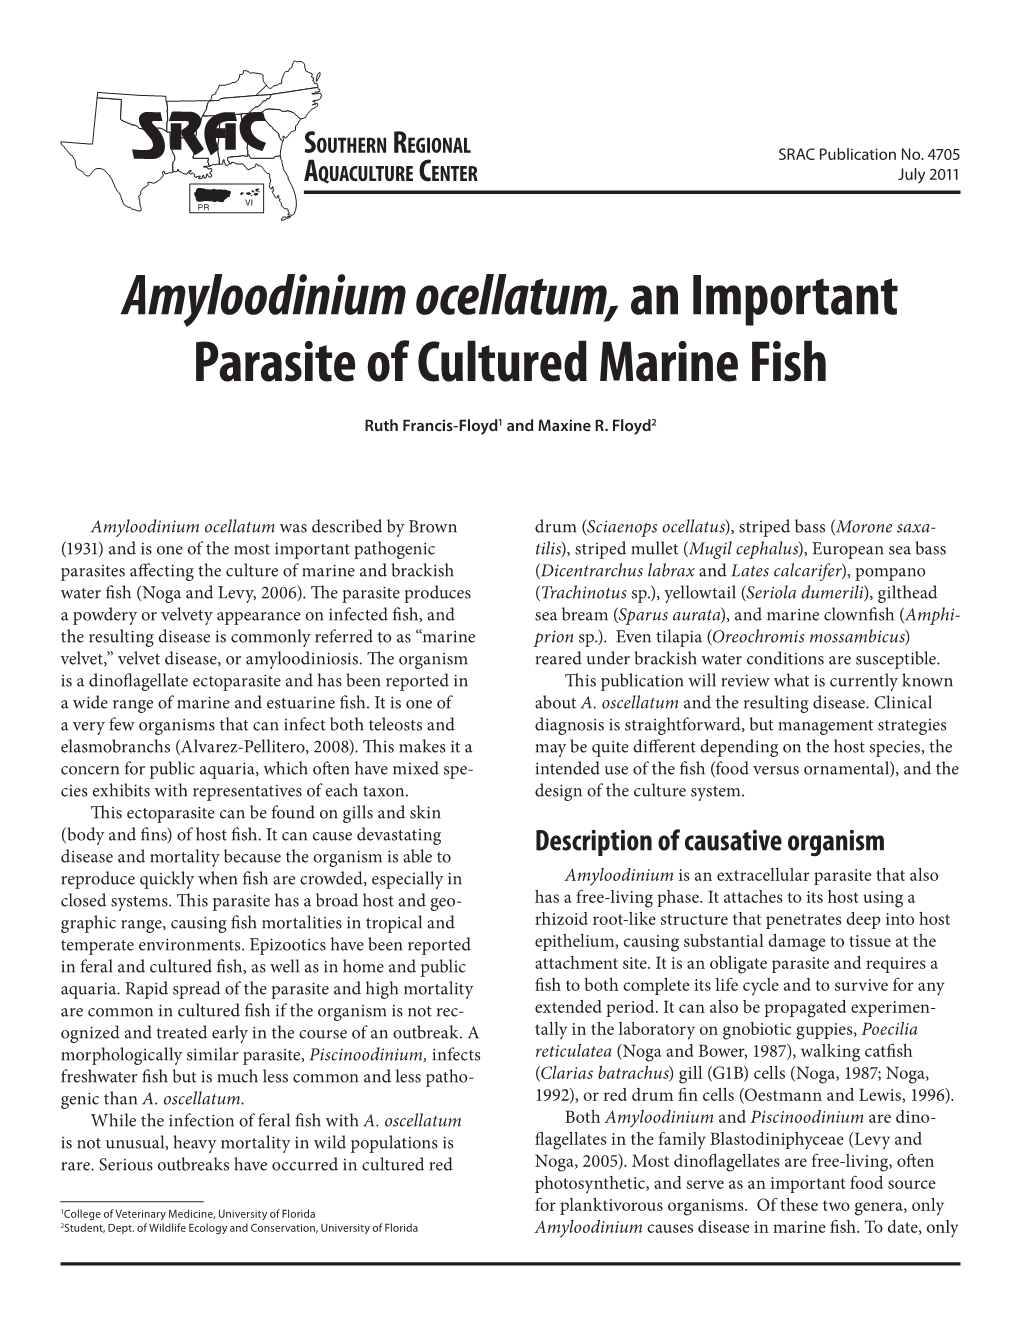 Amyloodinium Ocellatum,An Important Parasite of Cultured Marine Fish